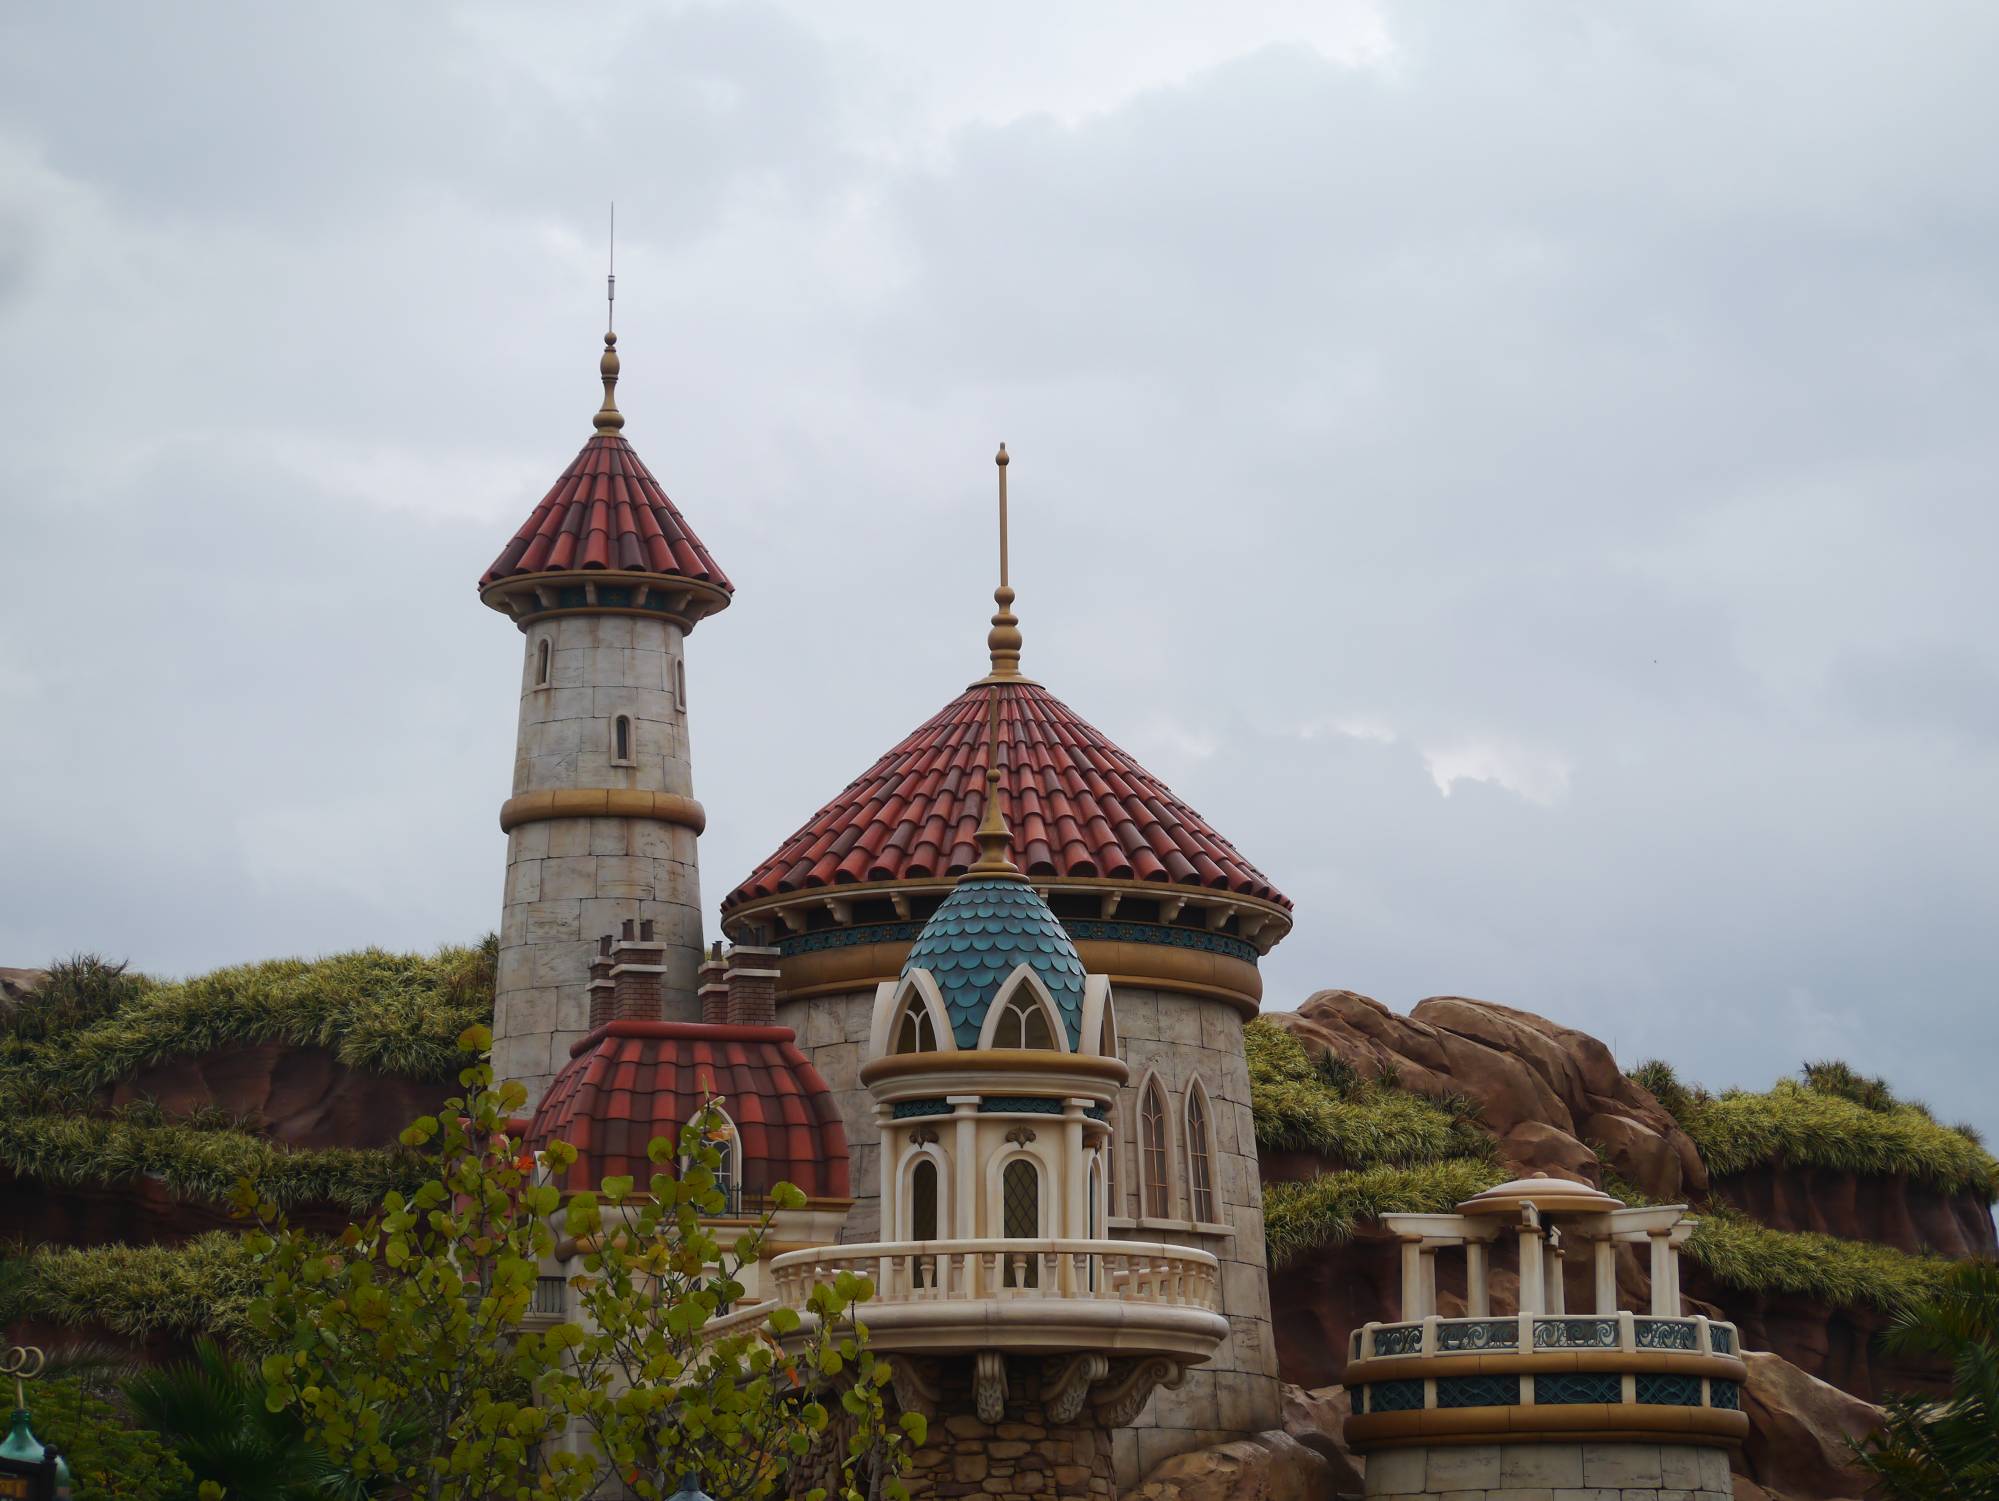 Magic Kingdom - Ariel's Undersea Adventure